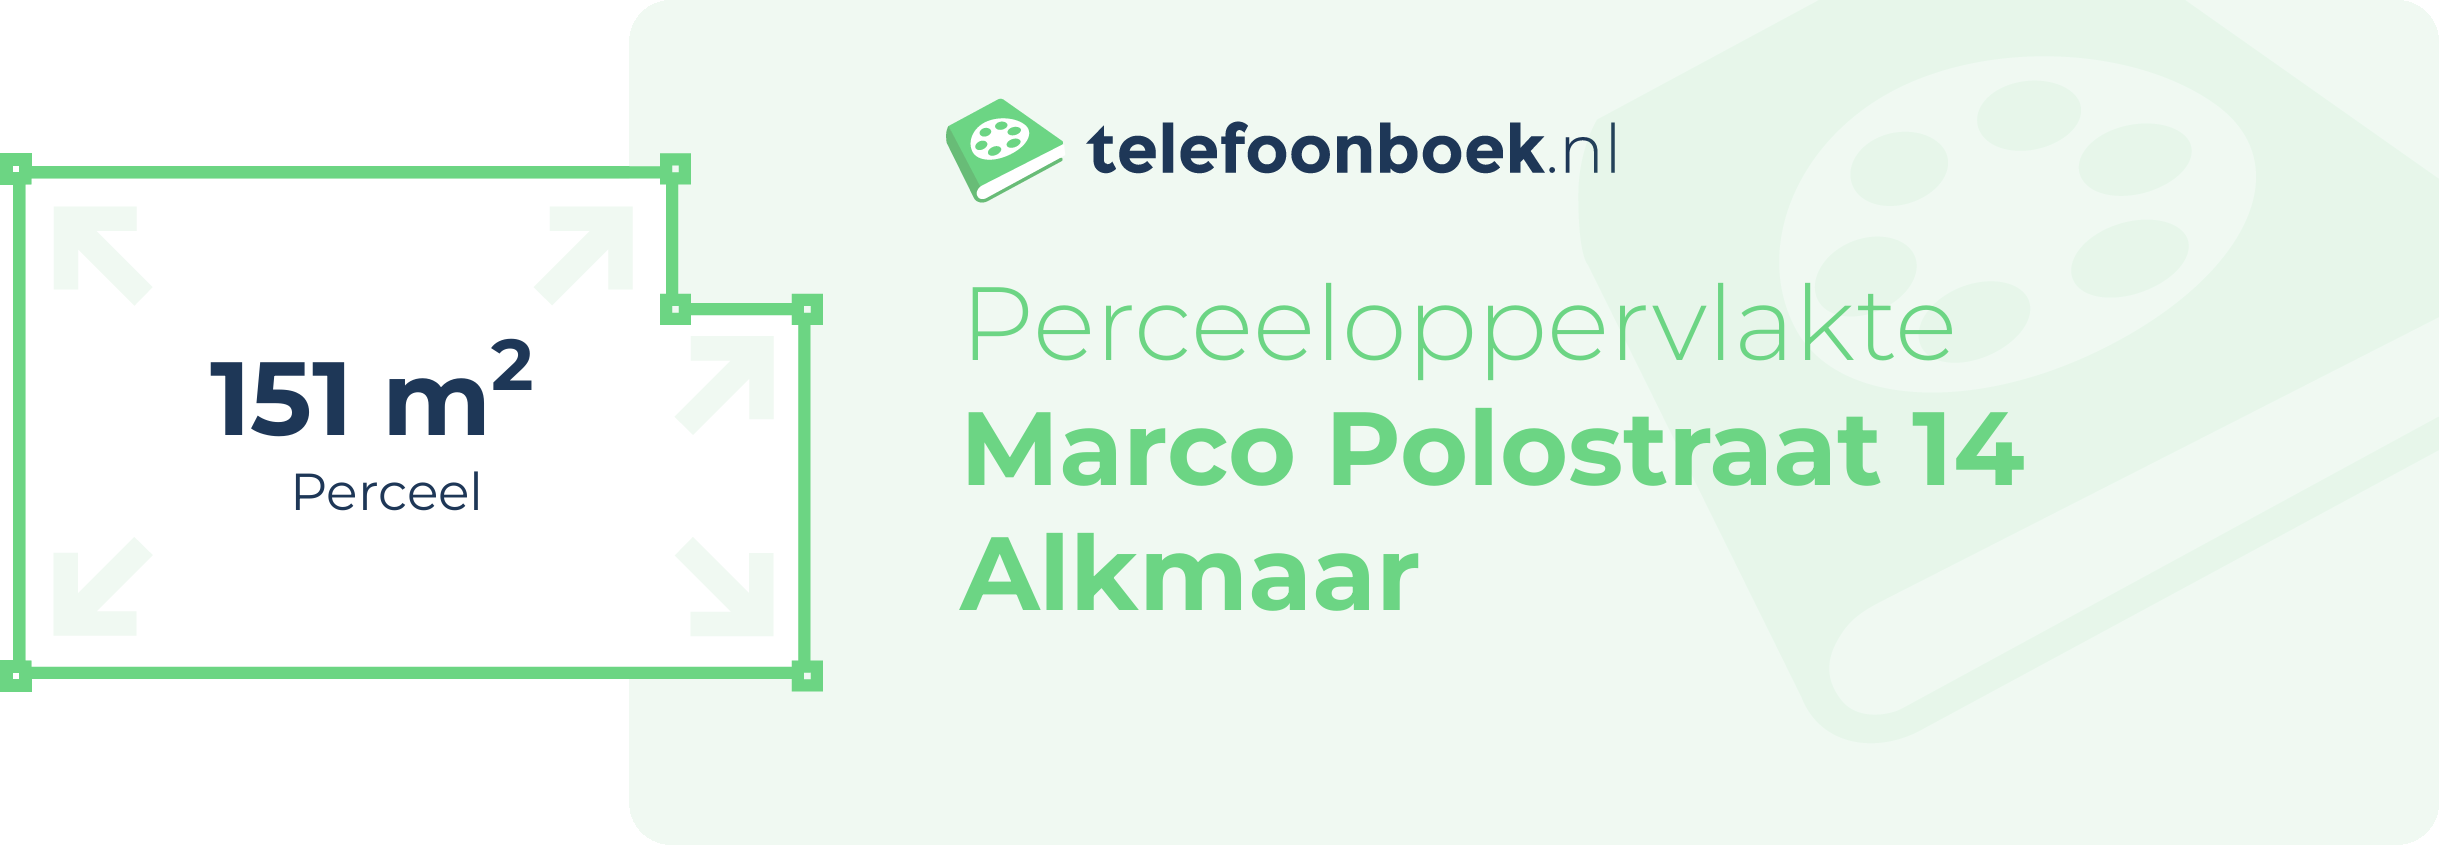 Perceeloppervlakte Marco Polostraat 14 Alkmaar